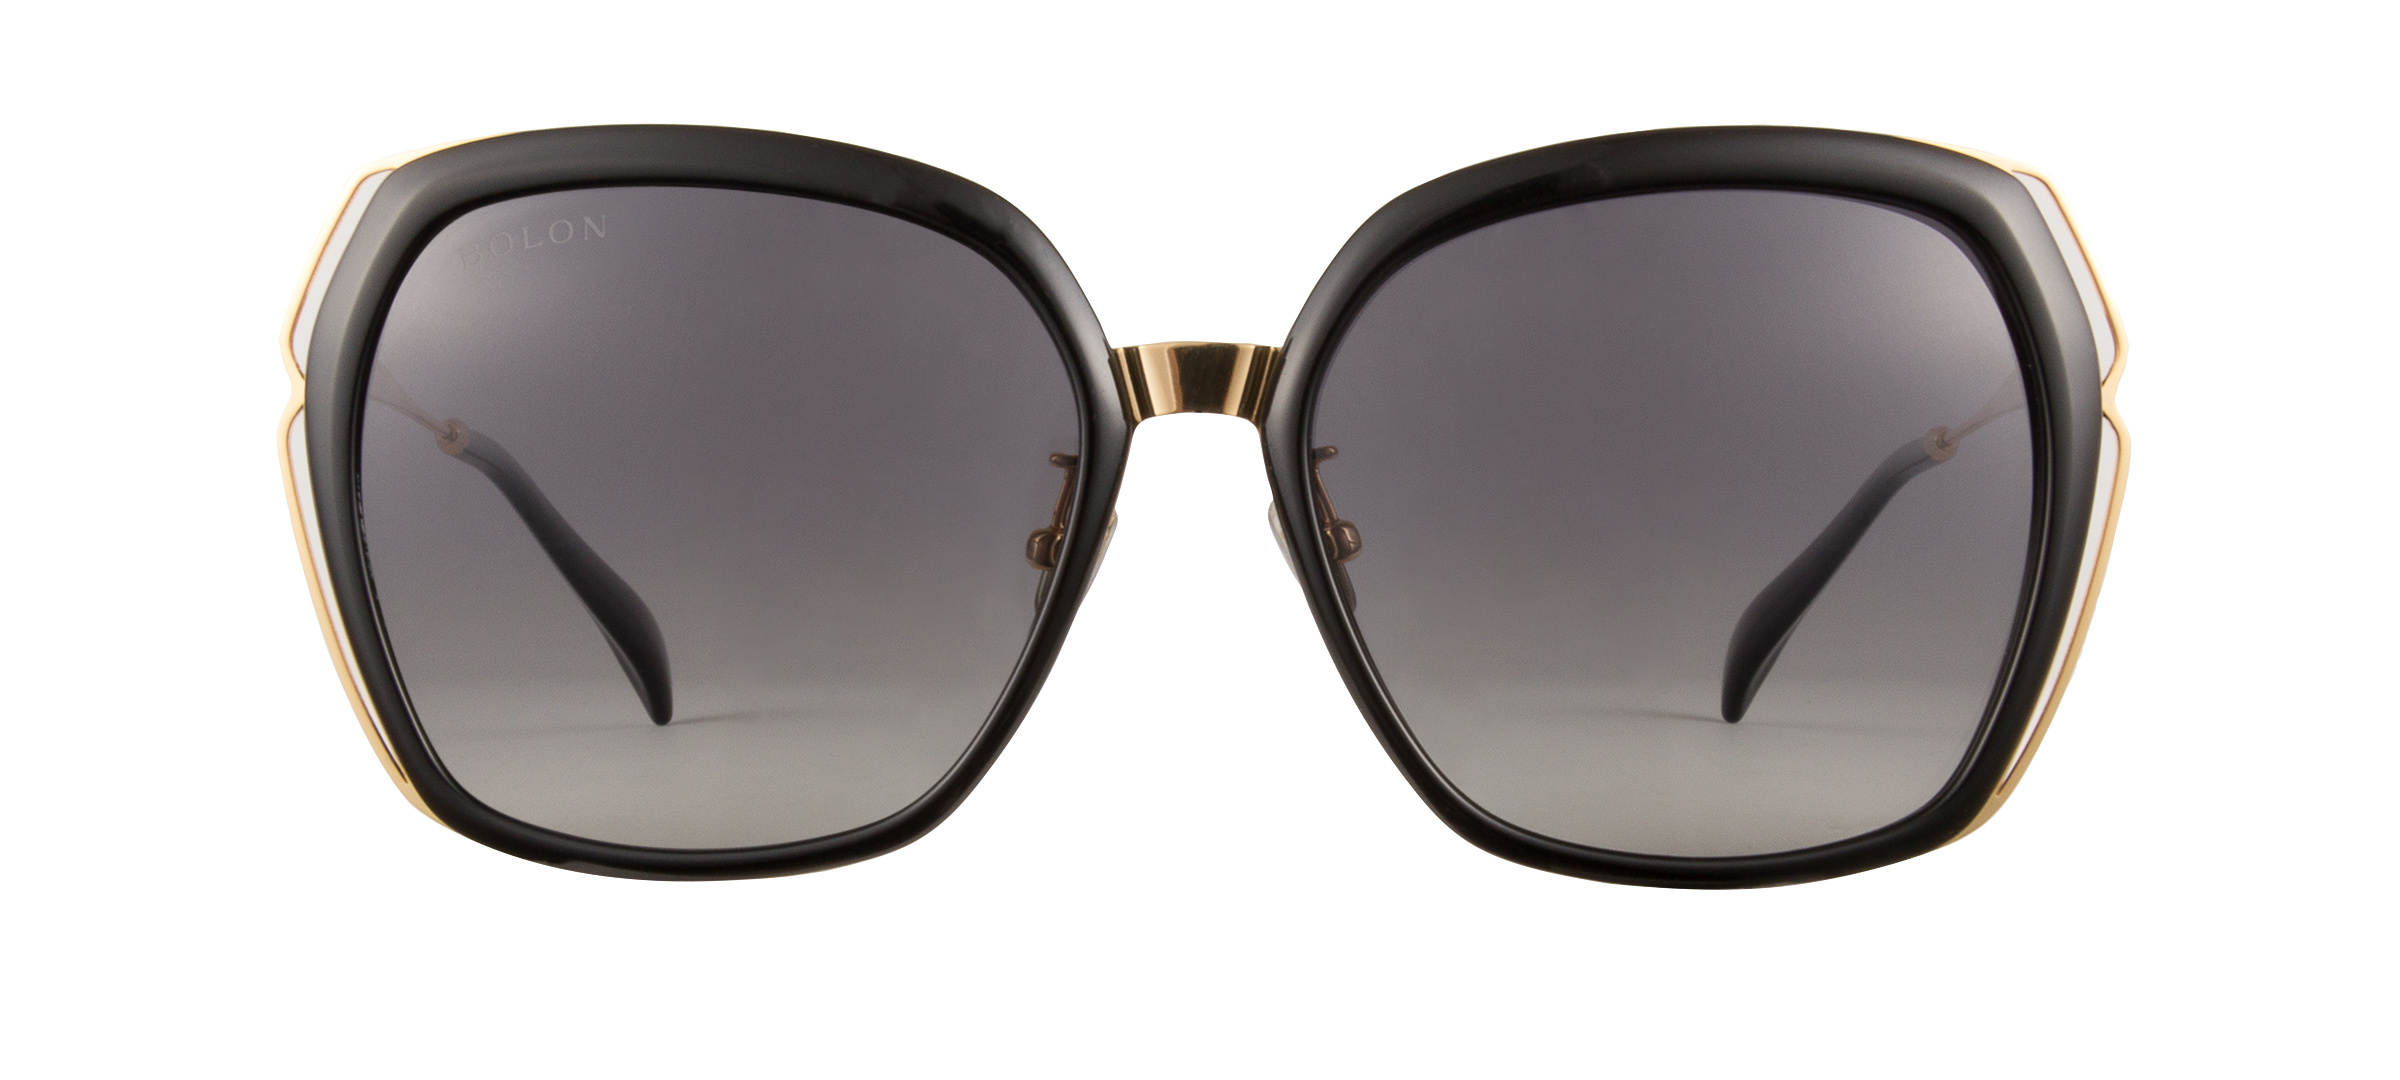 Oversized sunglasses - large fashionable sunglasses for less | Coastal